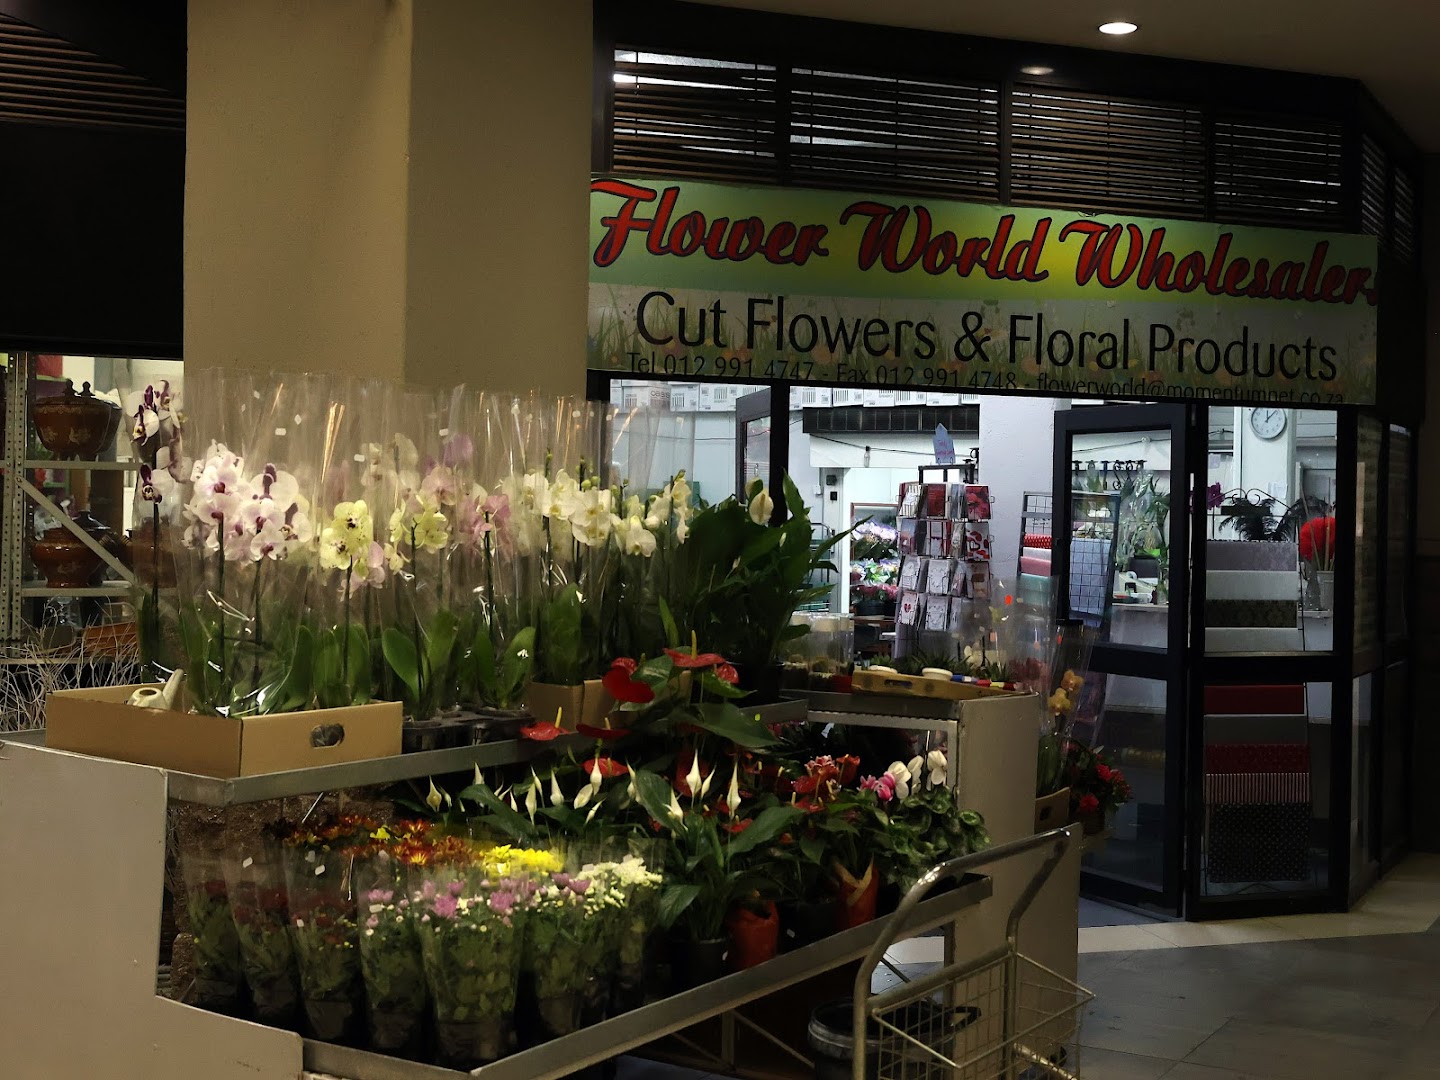 Flower World Wholesalers